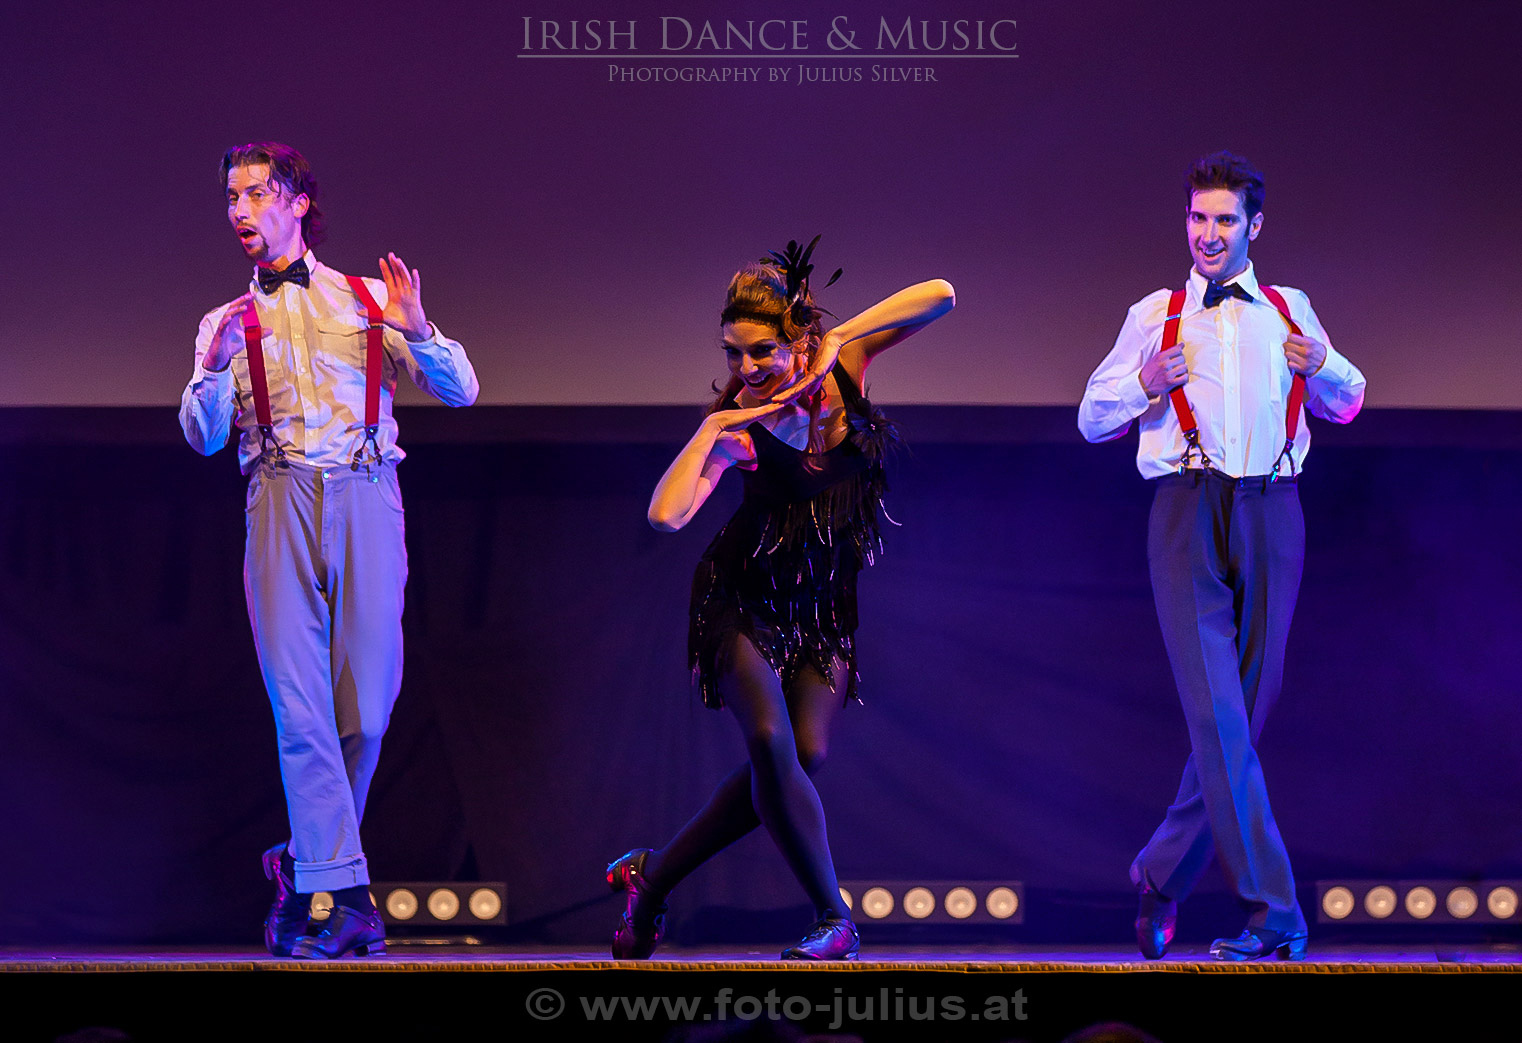 Irish_Dance_Vienna_005a.jpg, 522kB